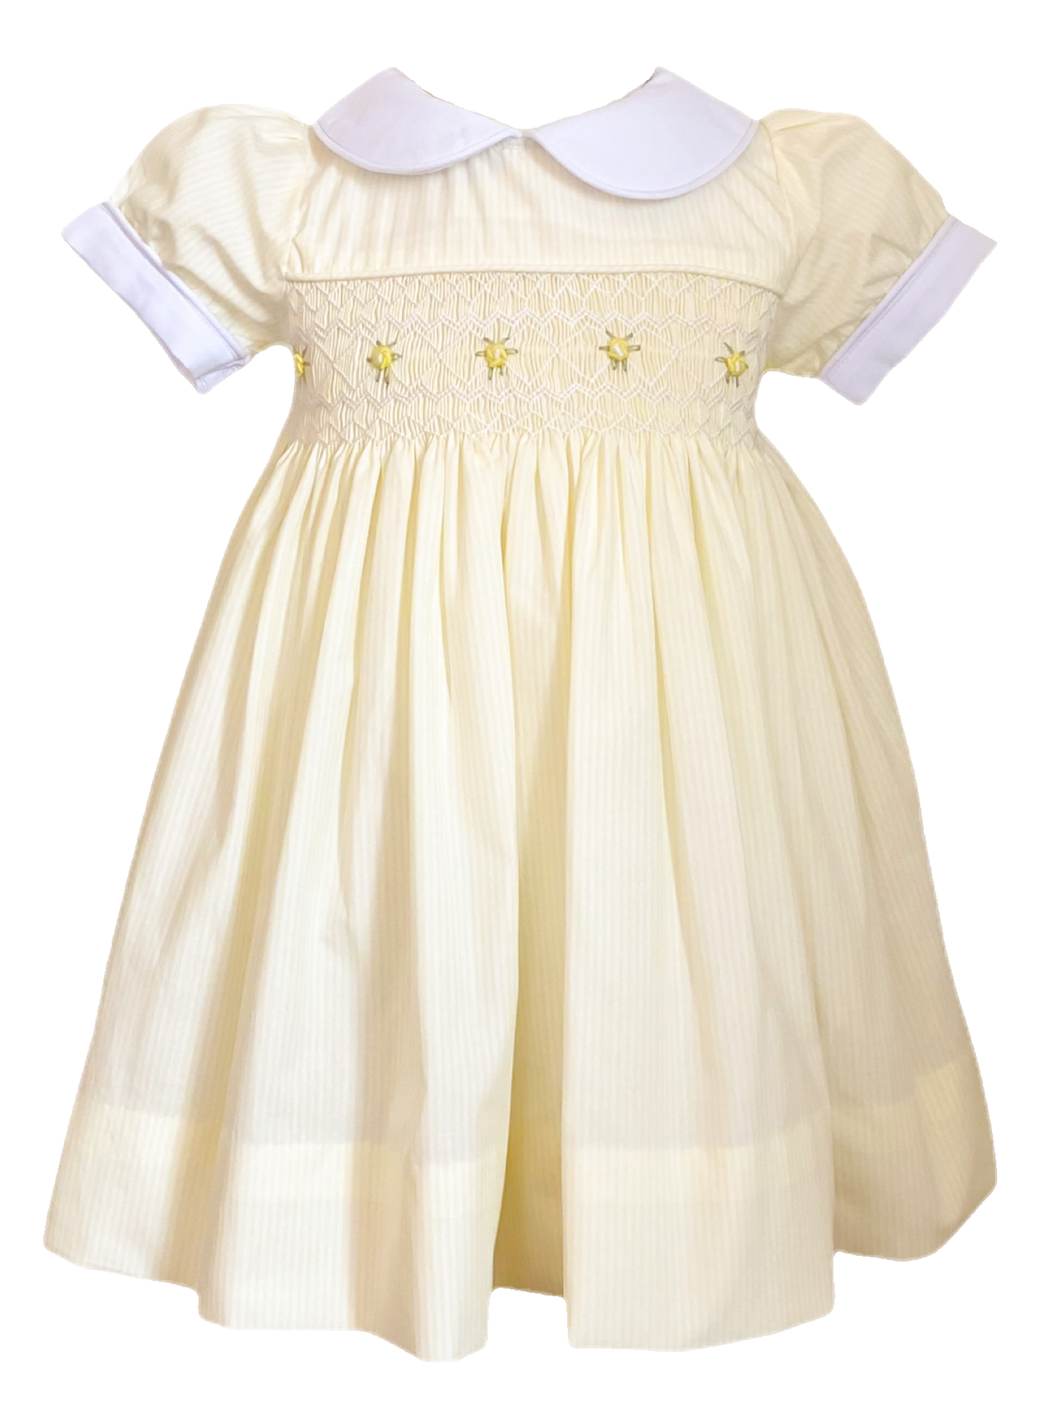 The Smocked Dress - Pastel Yellow Stripe